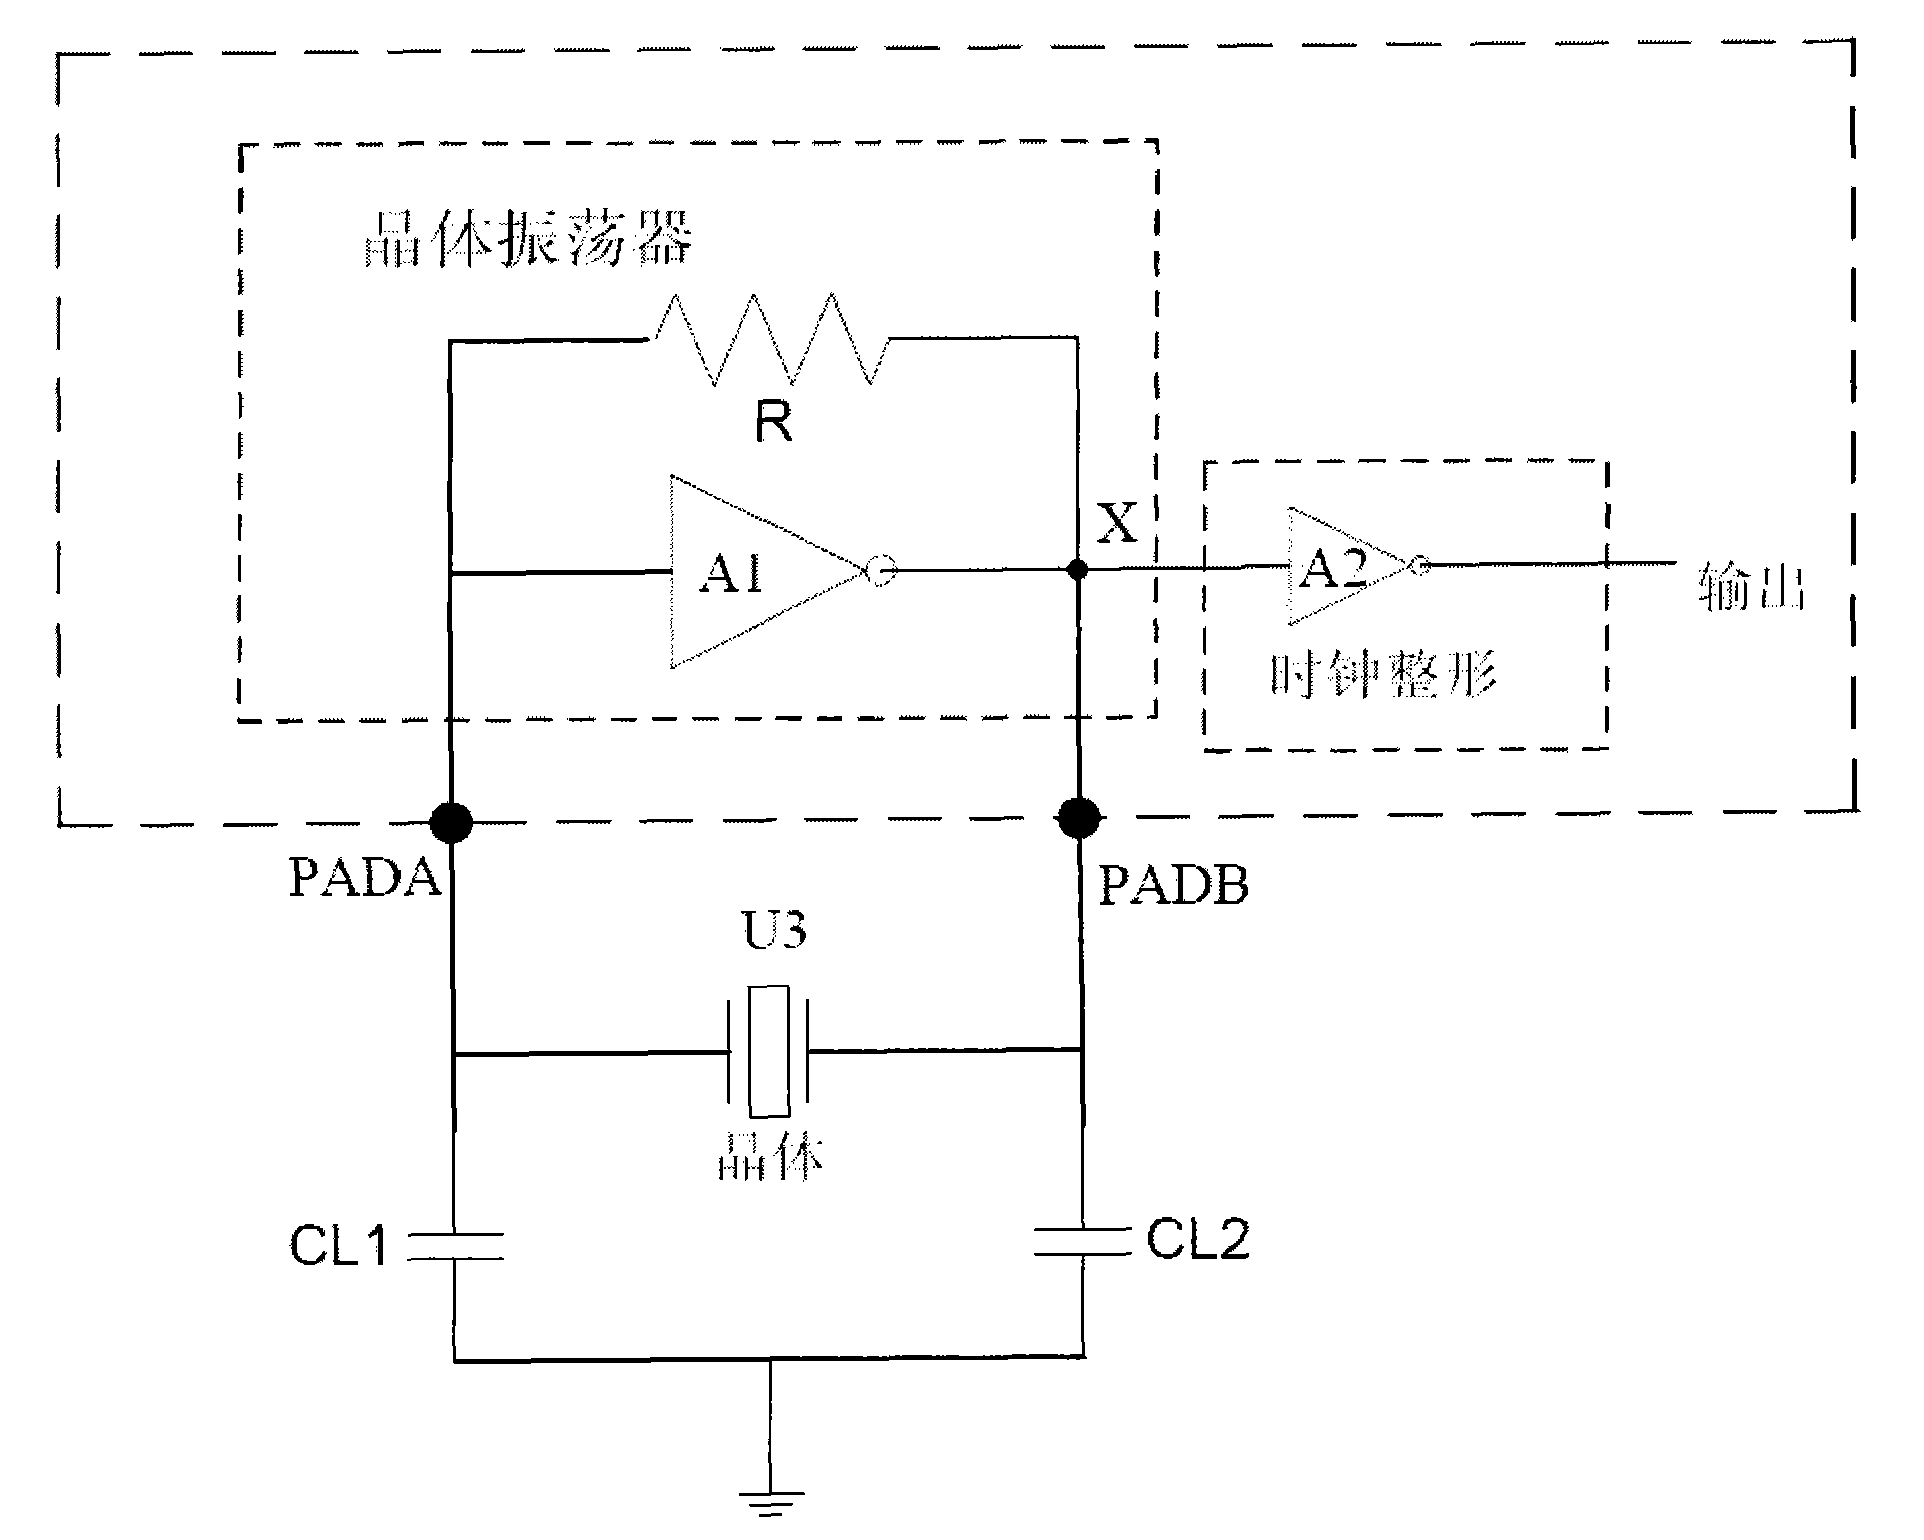 Clock signal generating circuit